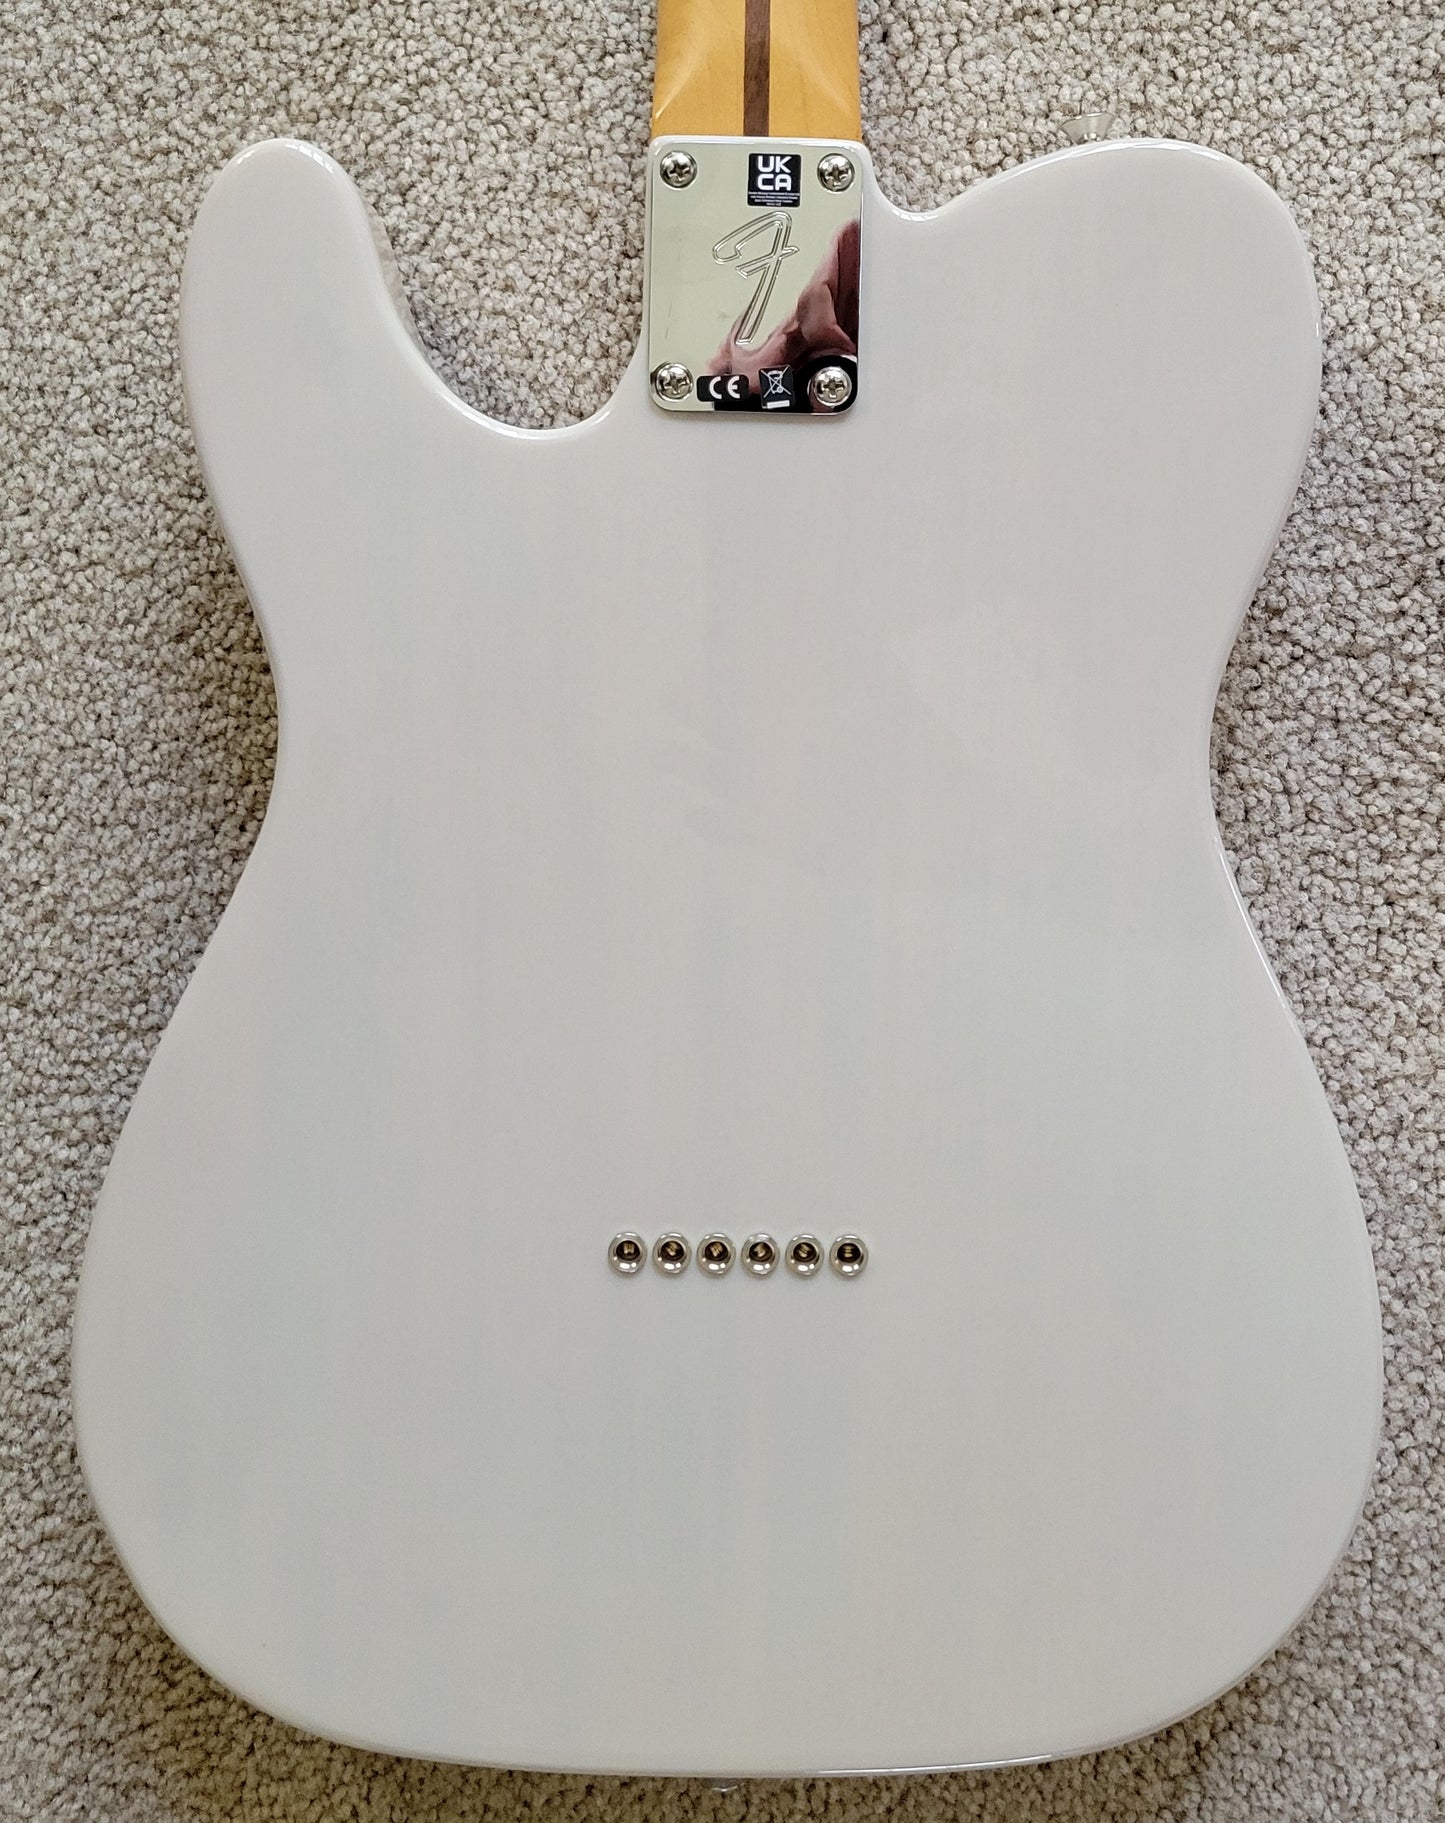 Fender Gold Foil Telecaster Electric Guitar, White Blonde Finish, New Gig Bag